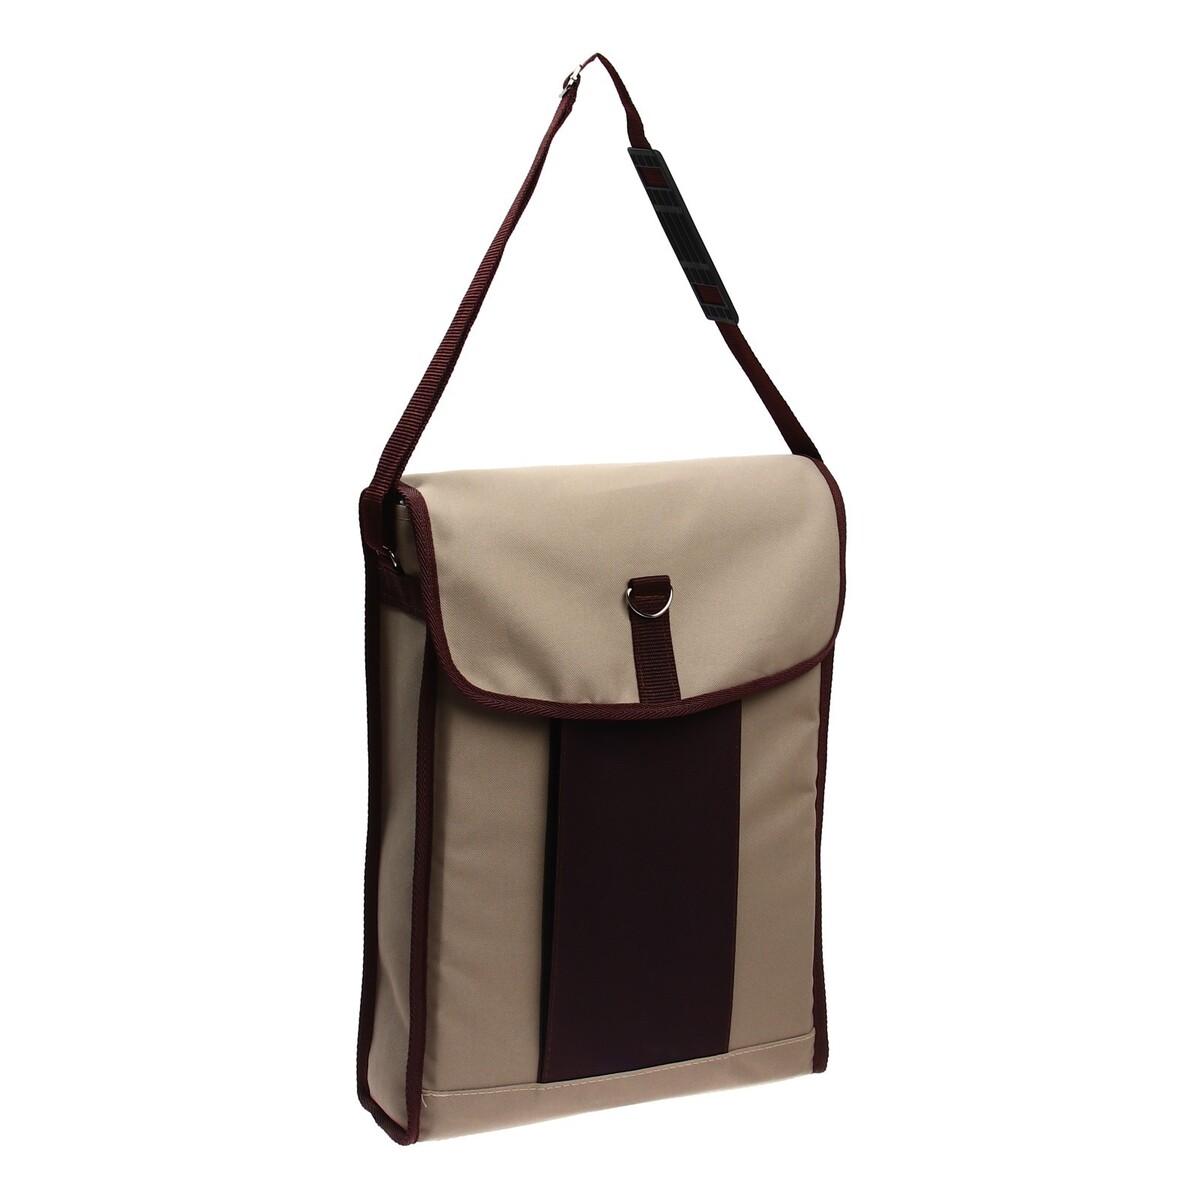 Сумка для планшета формата а3, 420 х 300 х 80 мм, бежевый/коричневый, estado сумка хозяйственная без застежки коричневый